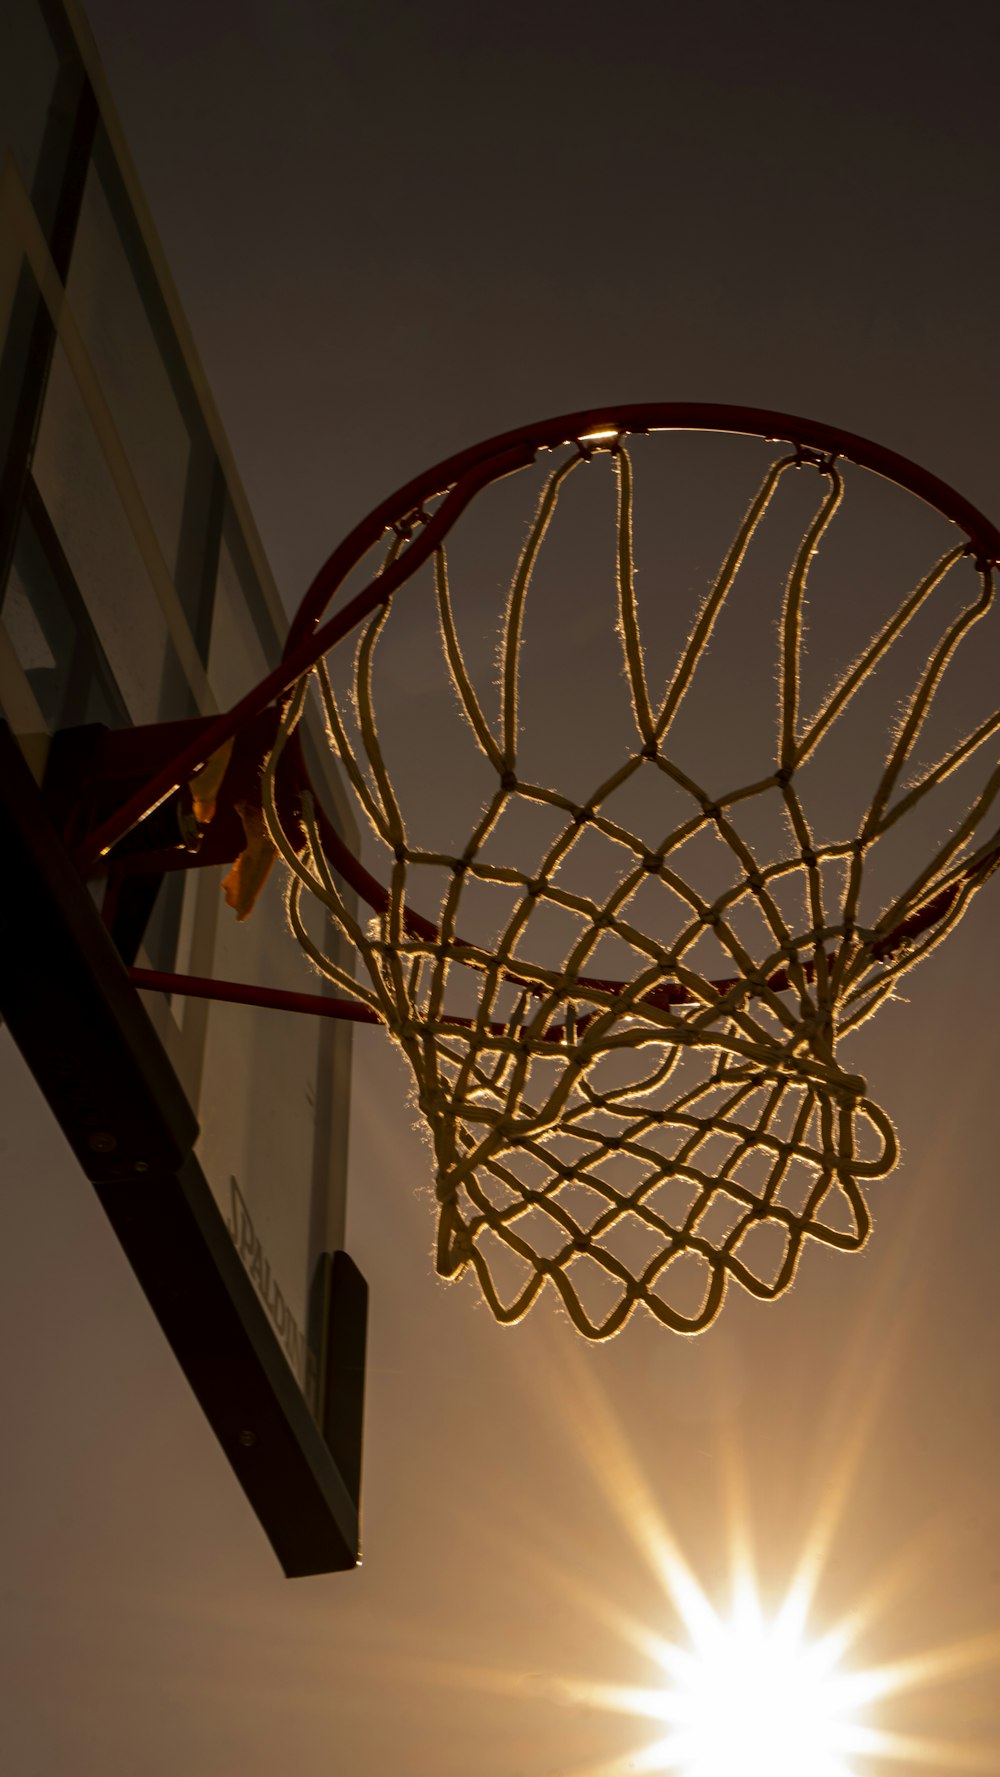 white and black basketball hoop